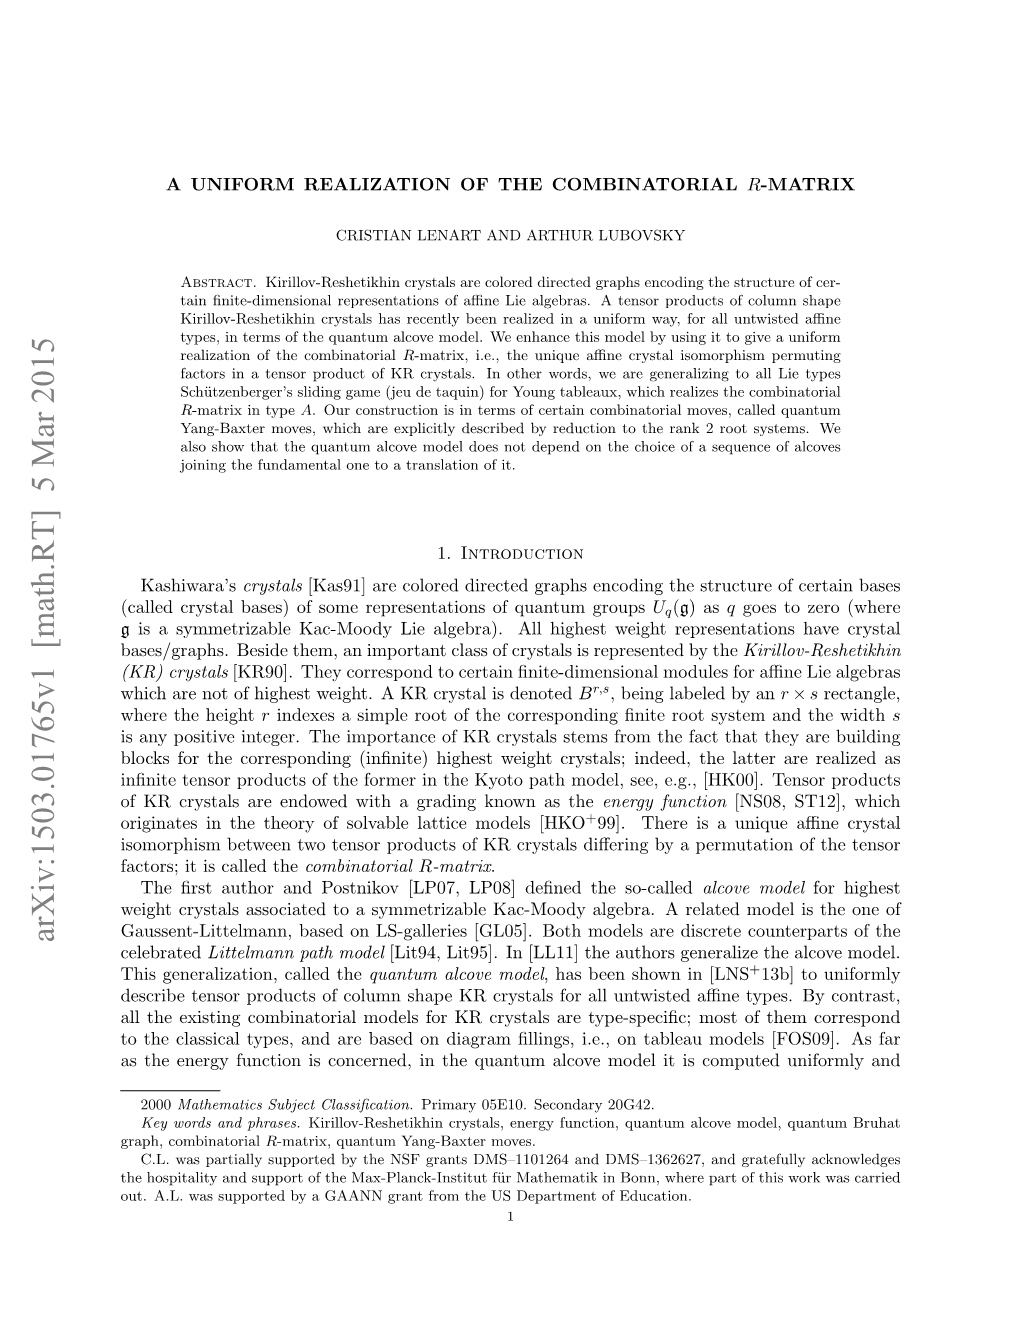 A Uniform Realization of the Combinatorial $ R $-Matrix